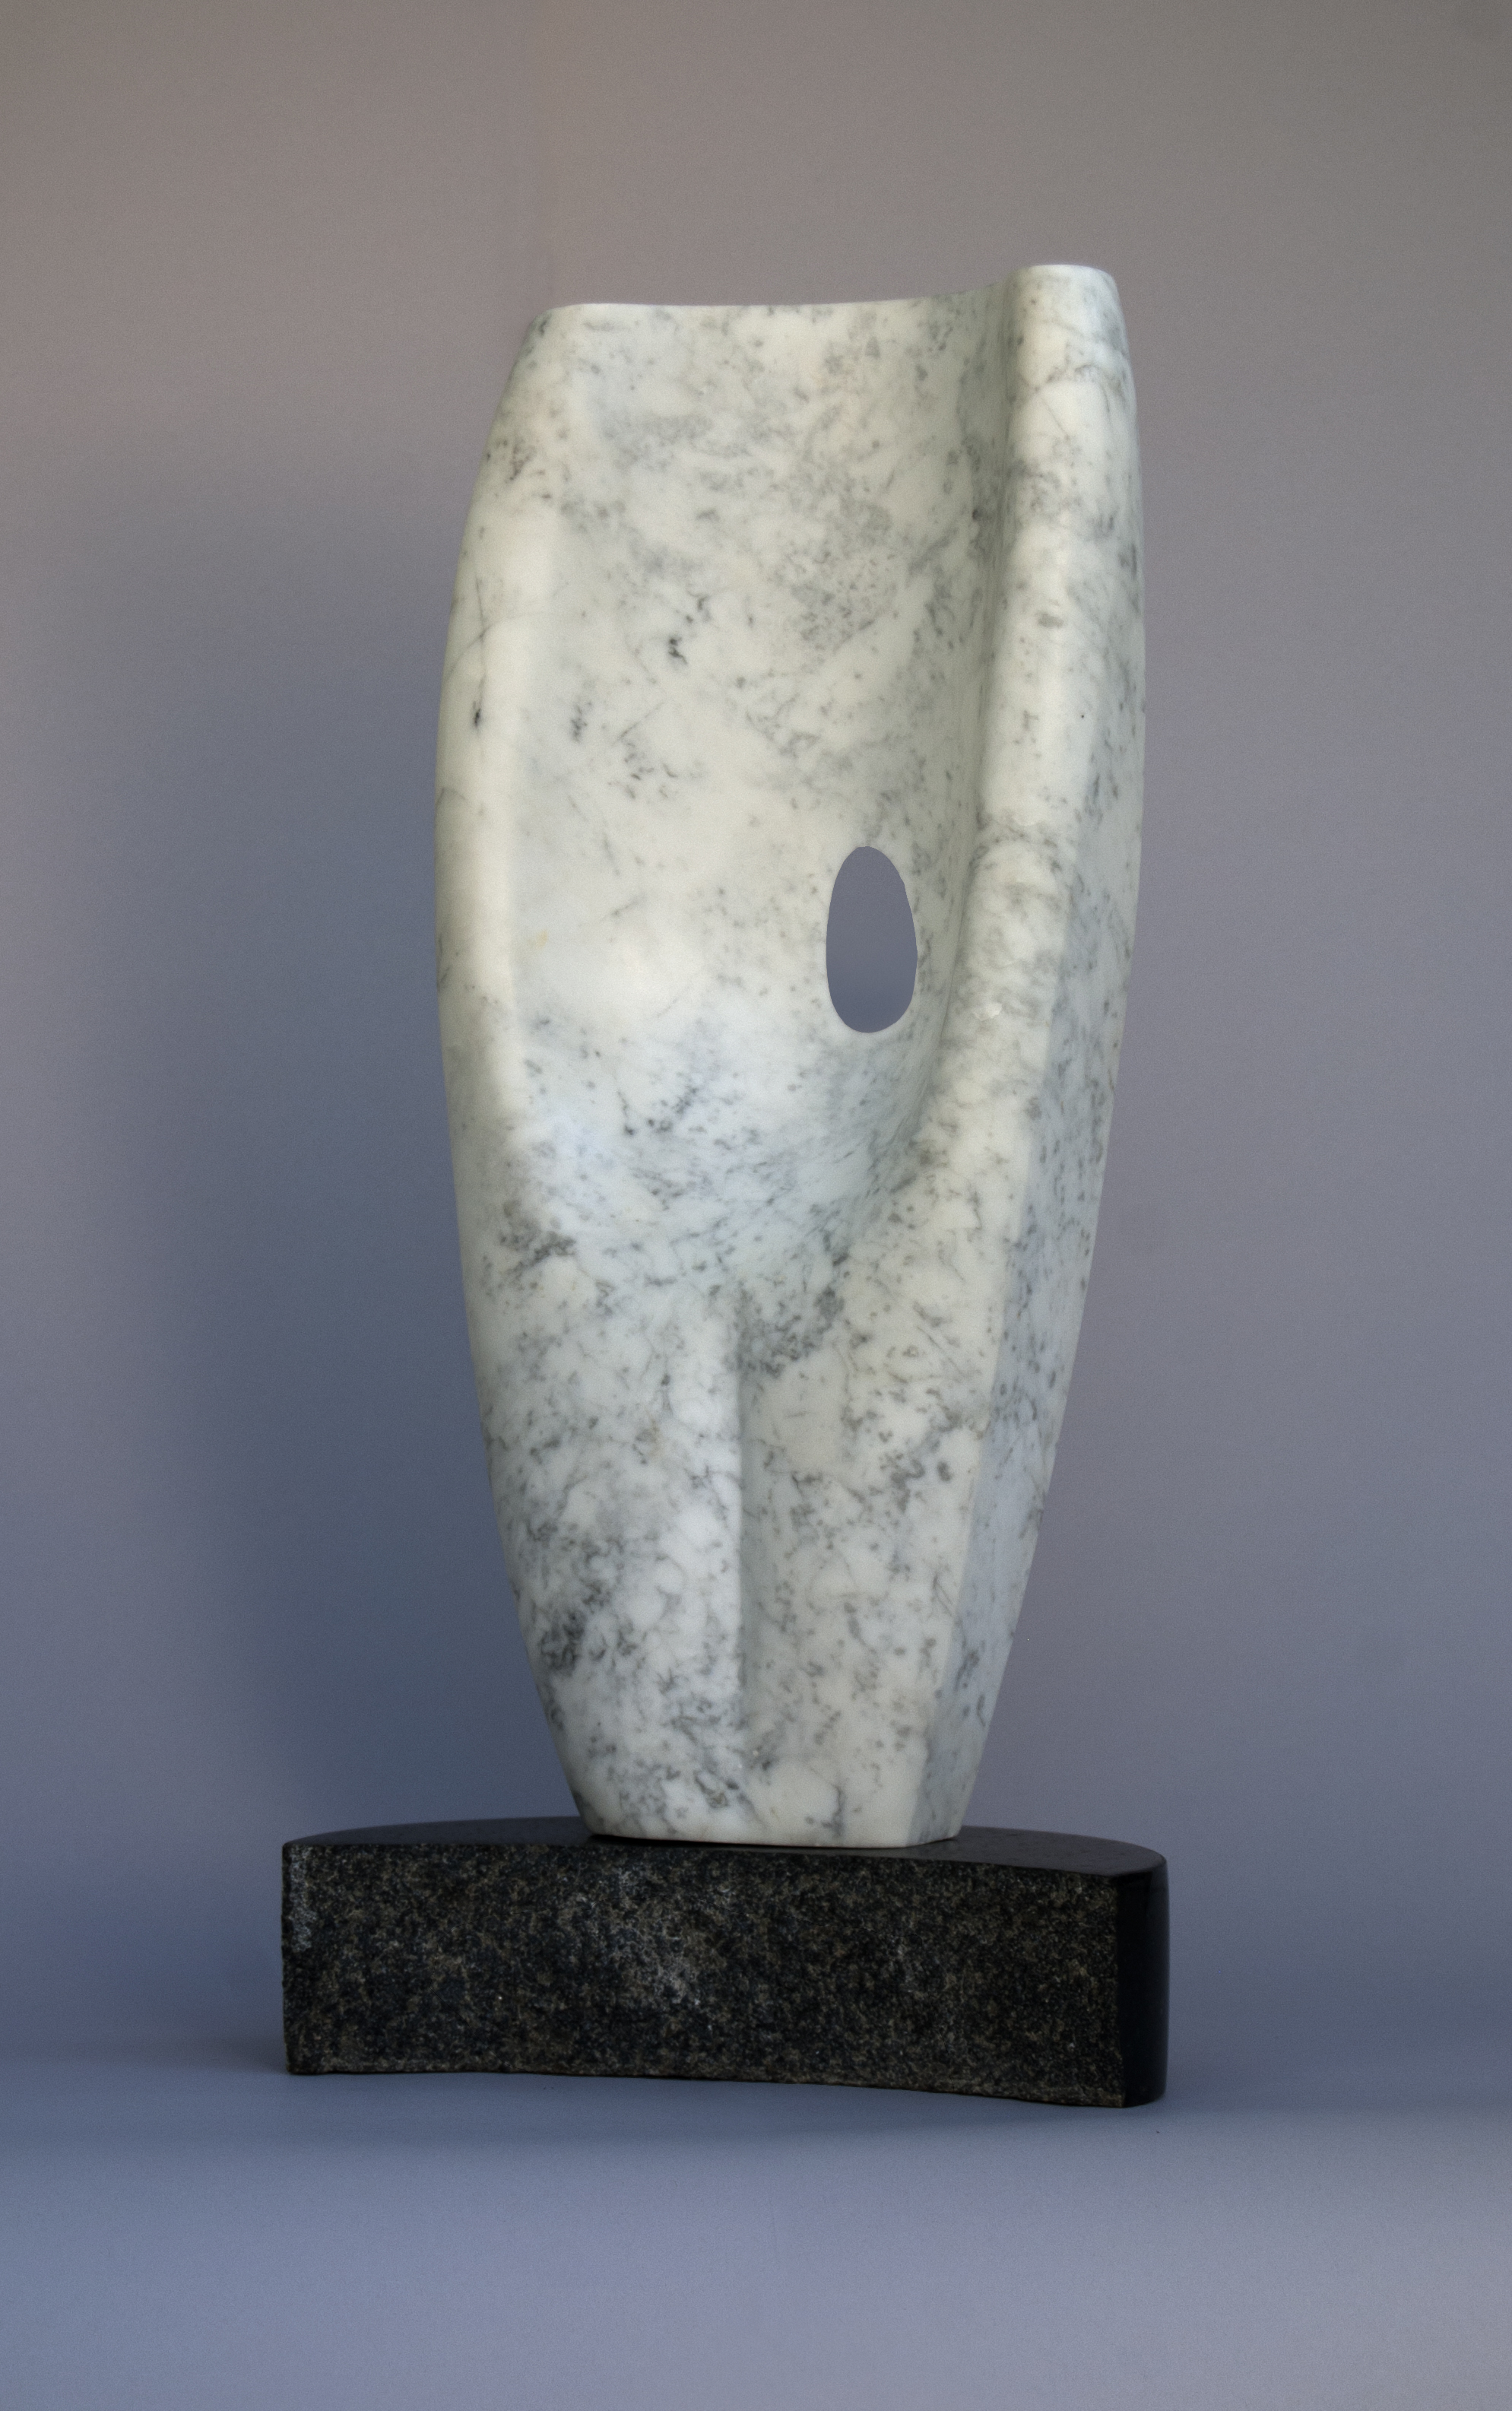 Ken Barnes, “Corona”, 24” X 12” X 5”, 2013, white marble